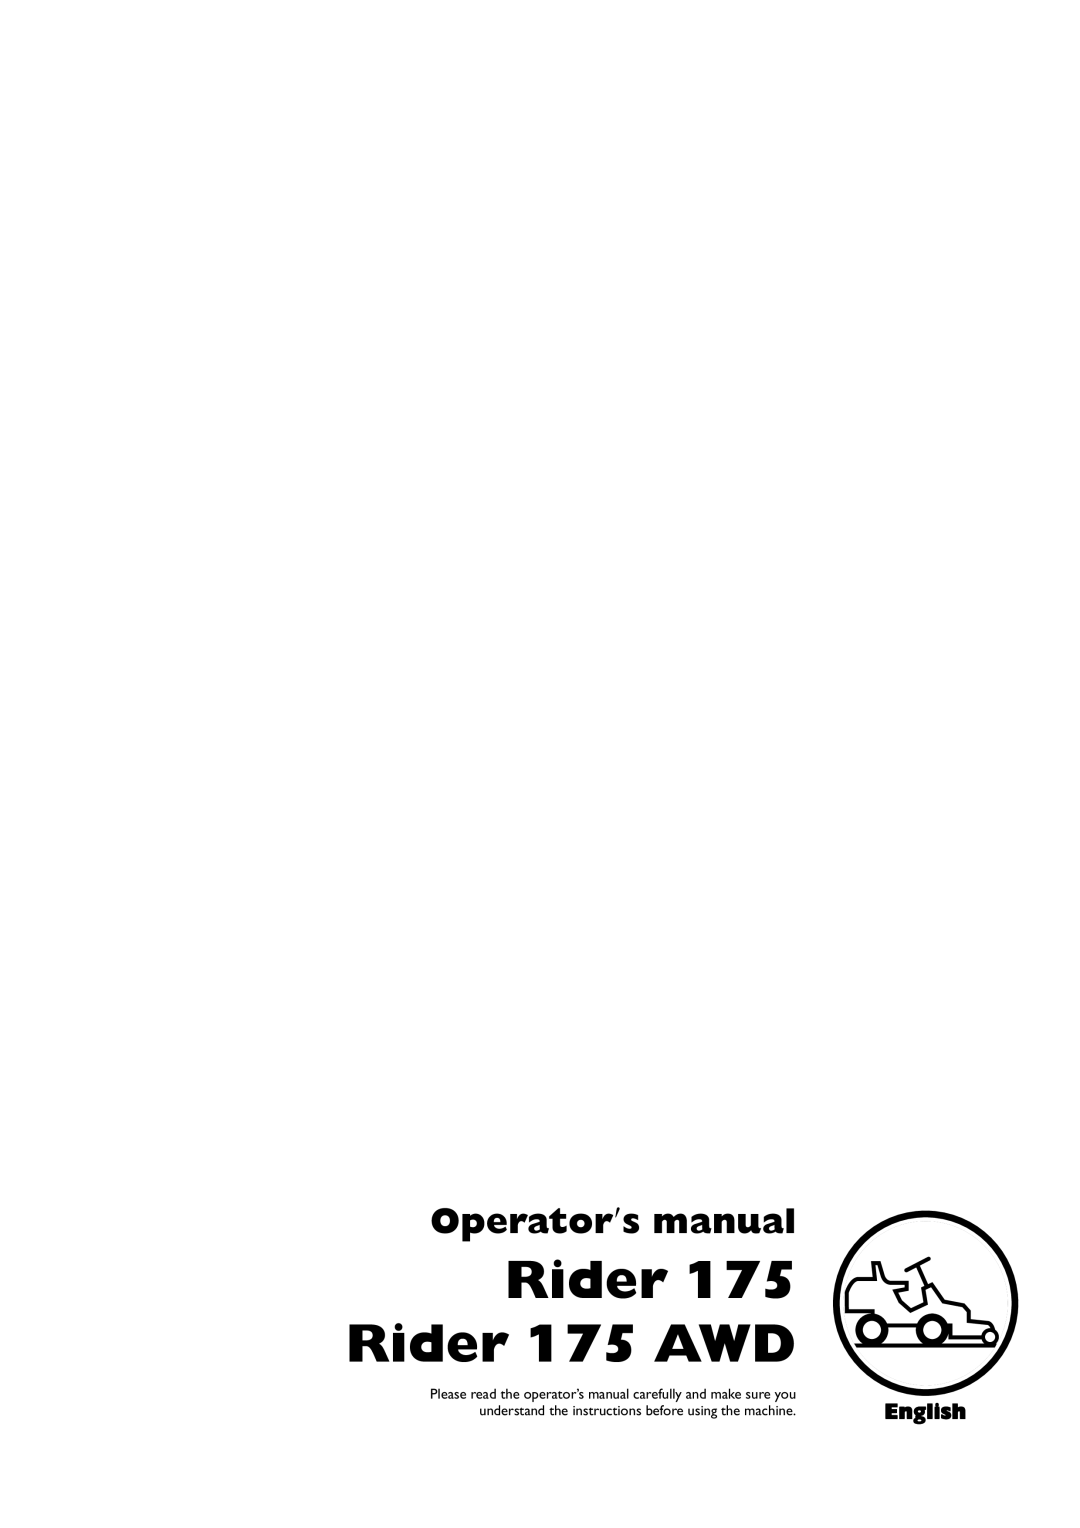 Husqvarna manual Rider 175 Rider 175 AWD, Operator′s manual, English 